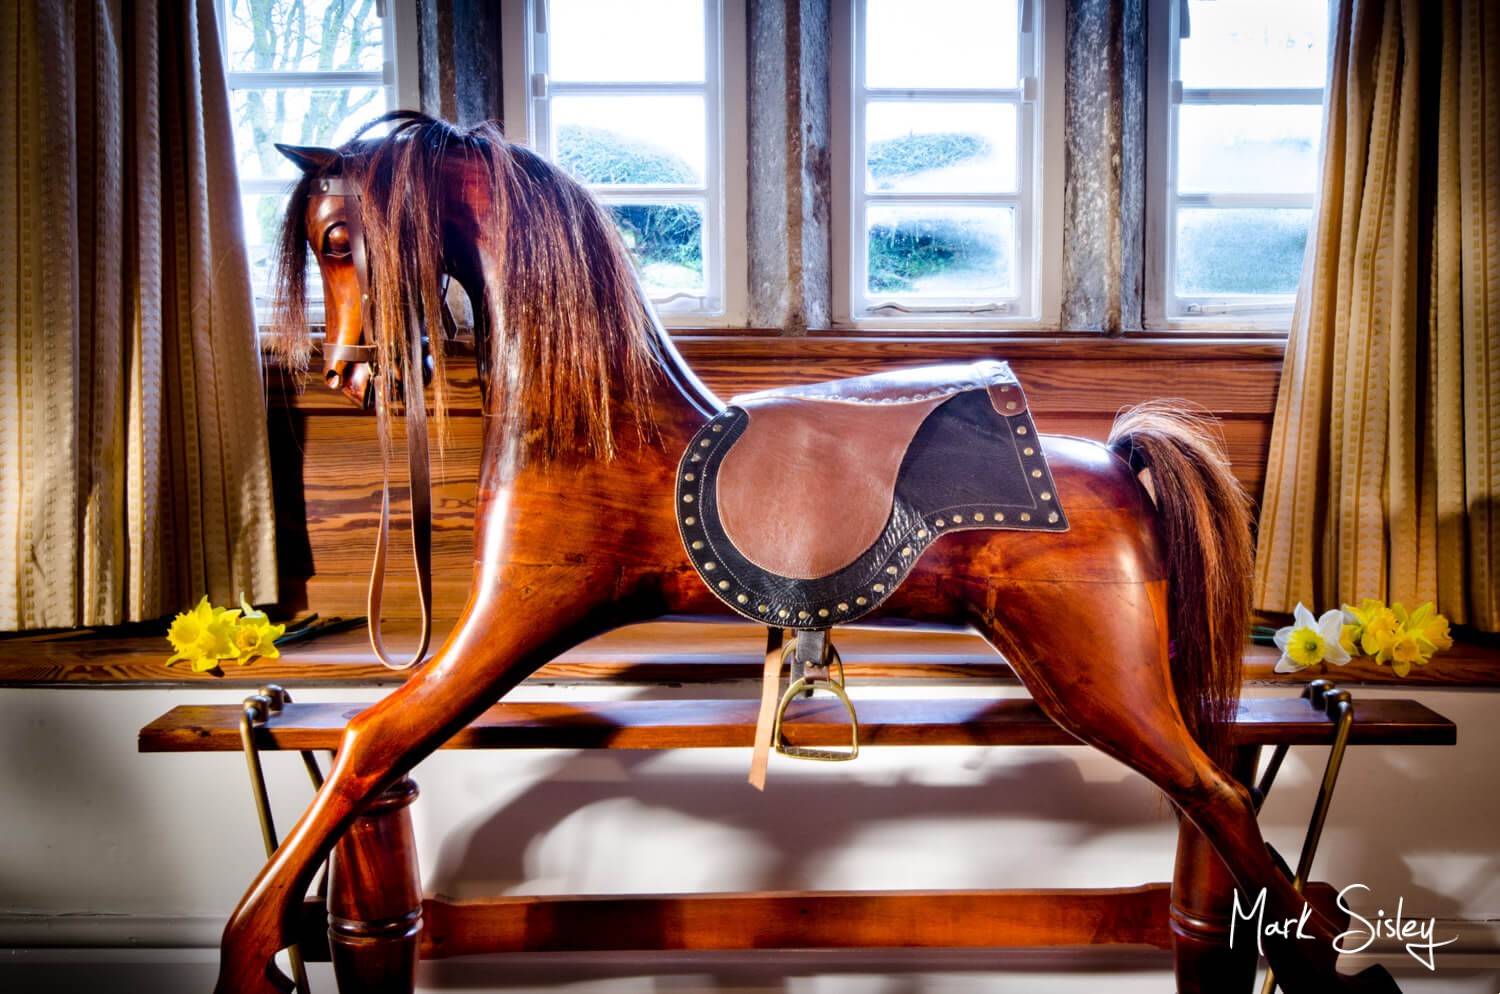 UK Holiday home interiors & exteriors photography - Rocking Horse shot